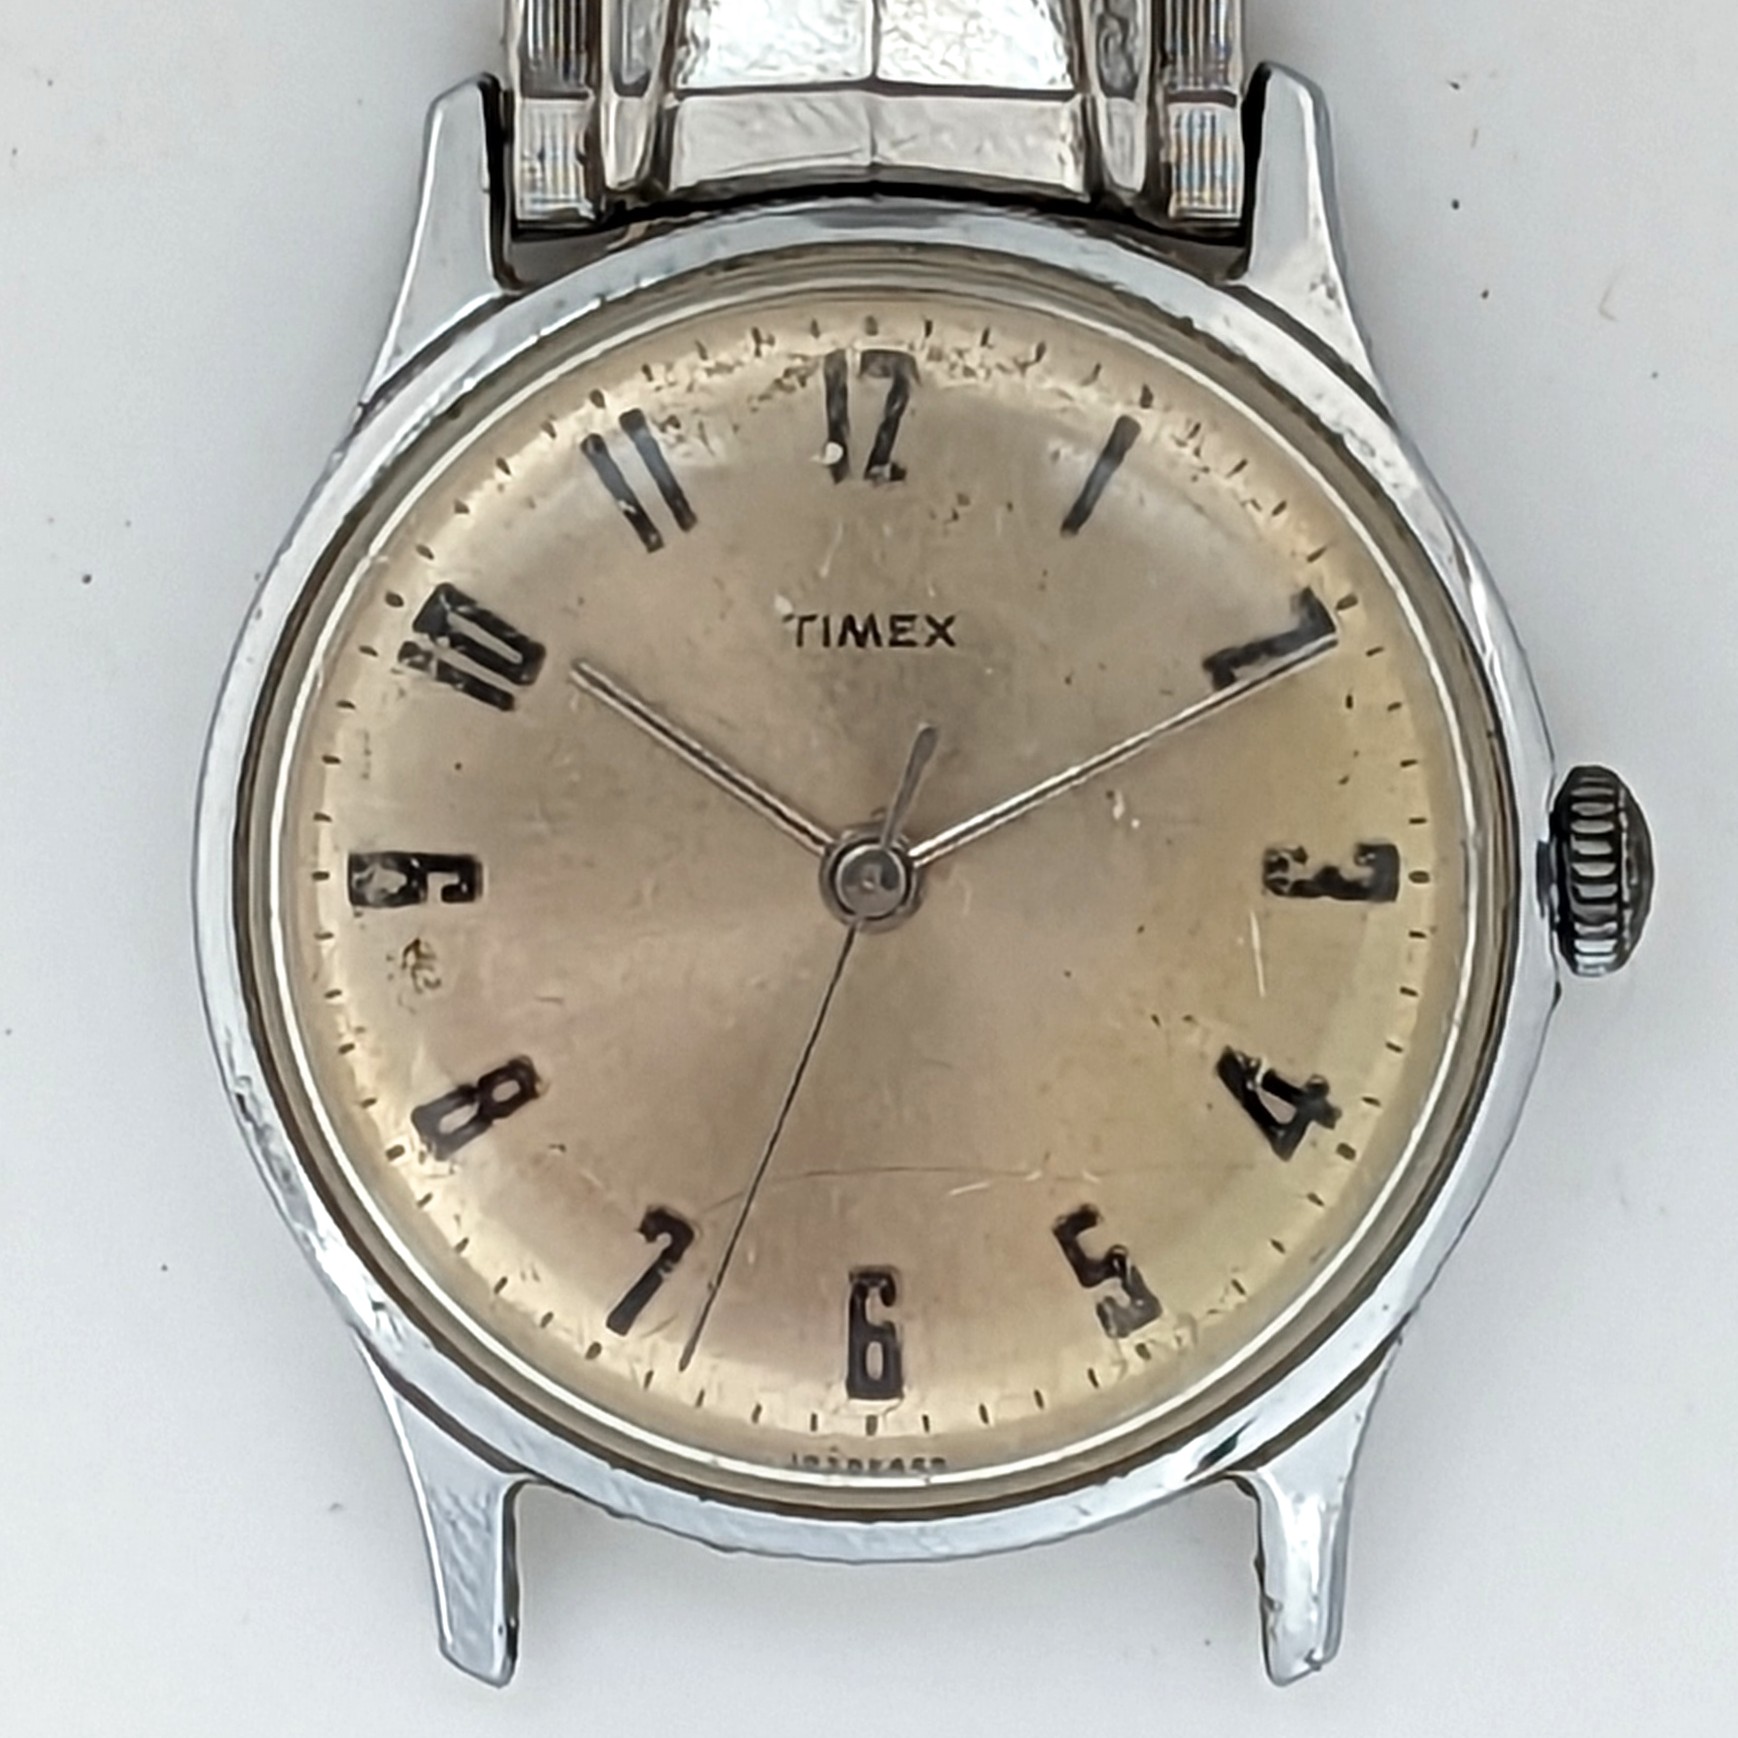 Timex Mercury 1037 2469 [1969]